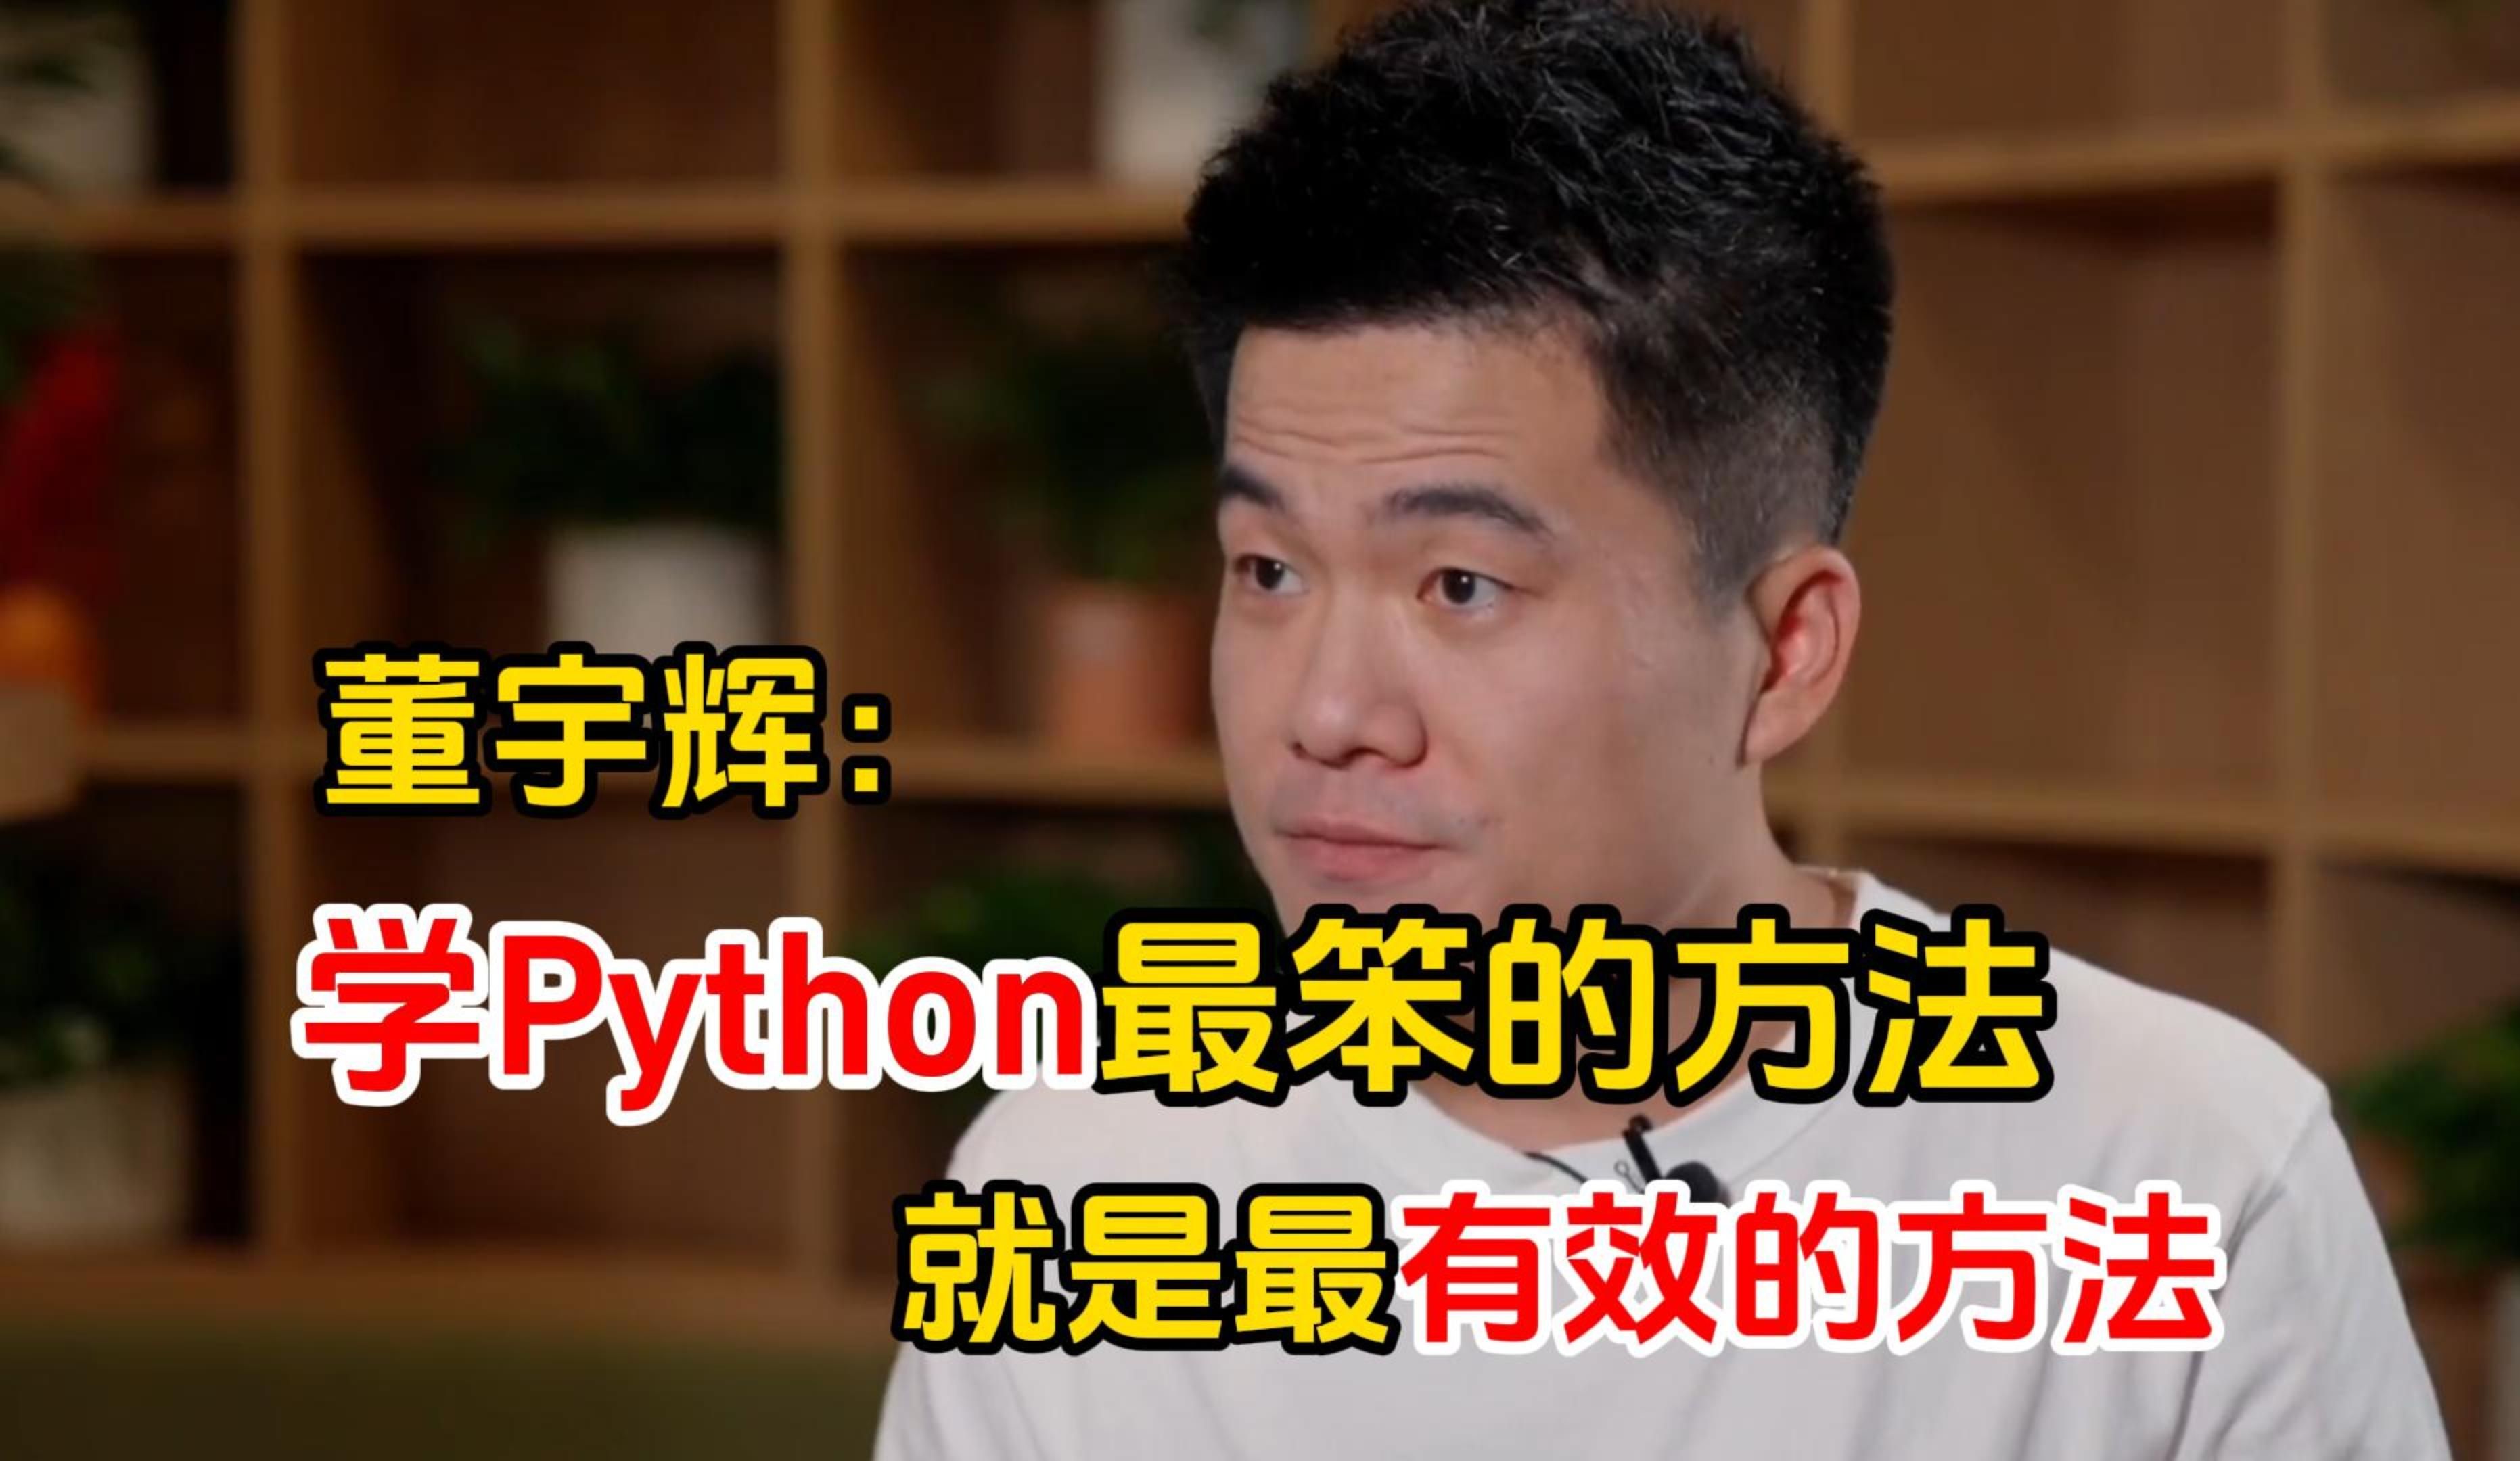 【Python学习】大实话！董宇辉给所有学Python的忠告：学Python就是，最笨方法即最有效~